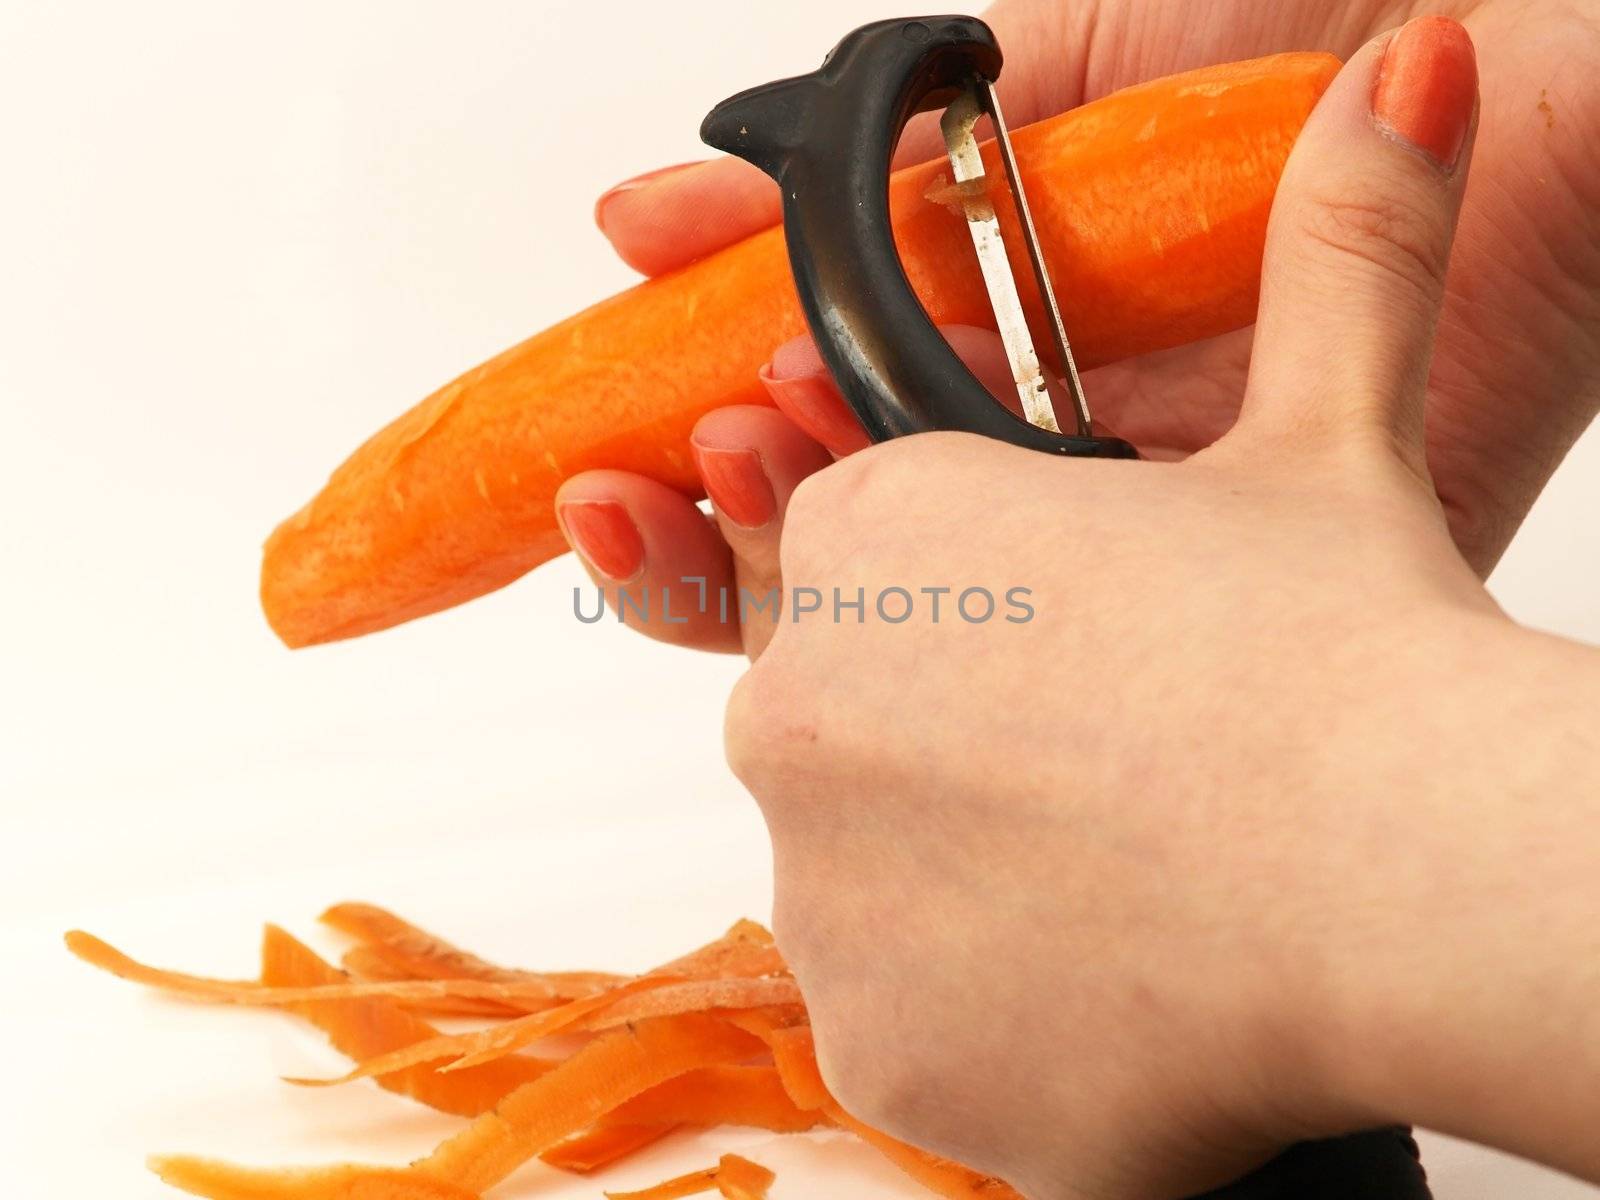 Pealing a carrot by Arvebettum